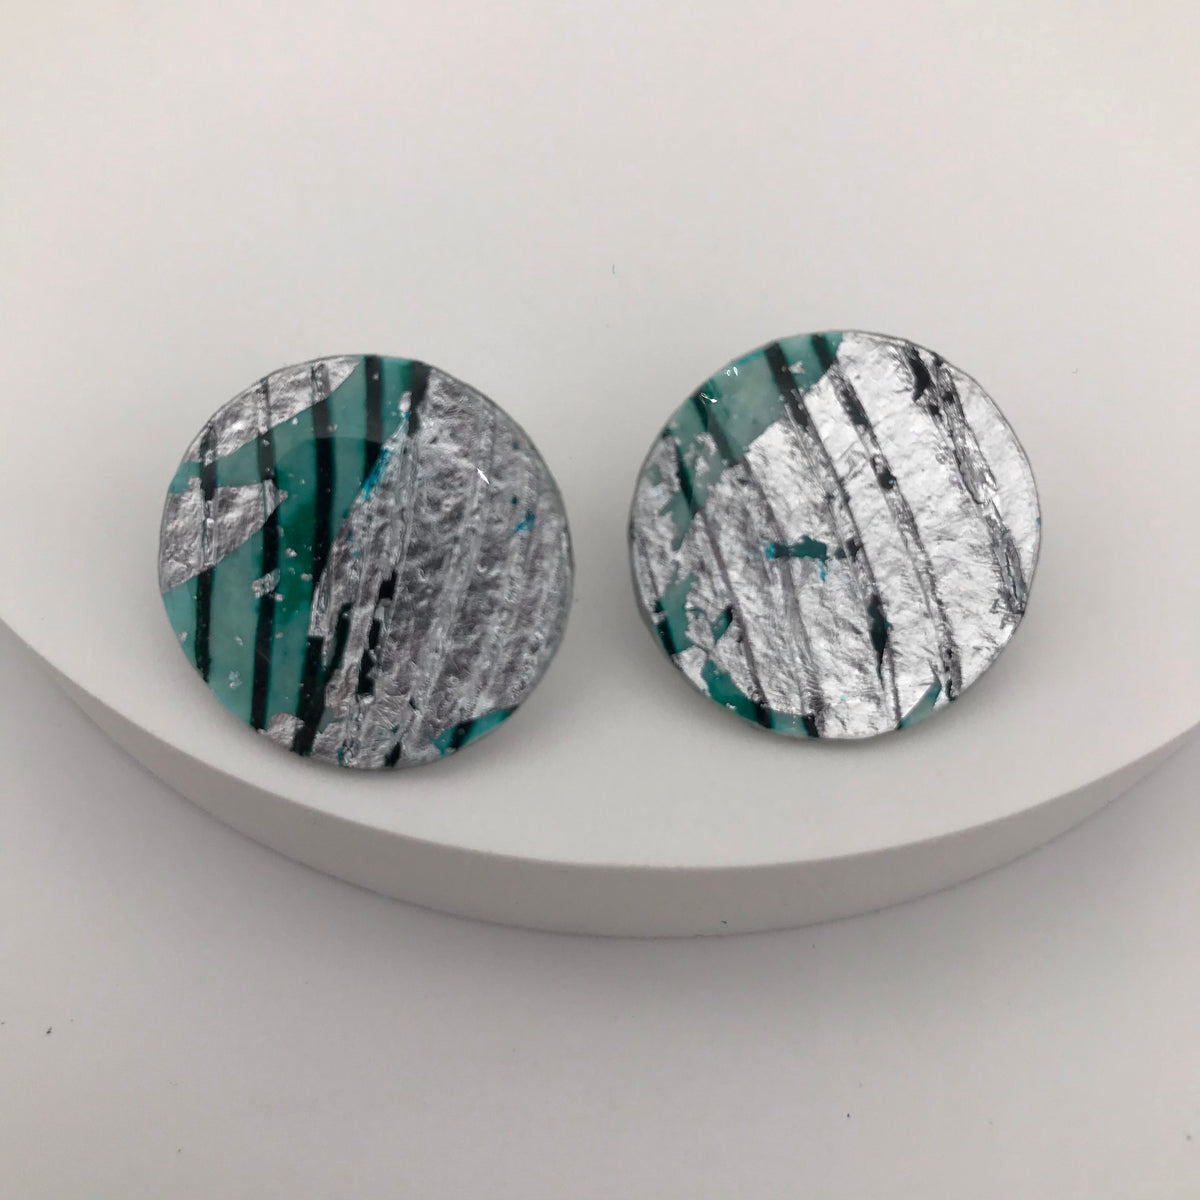 Ró sgraffito earrings in silver/aqua